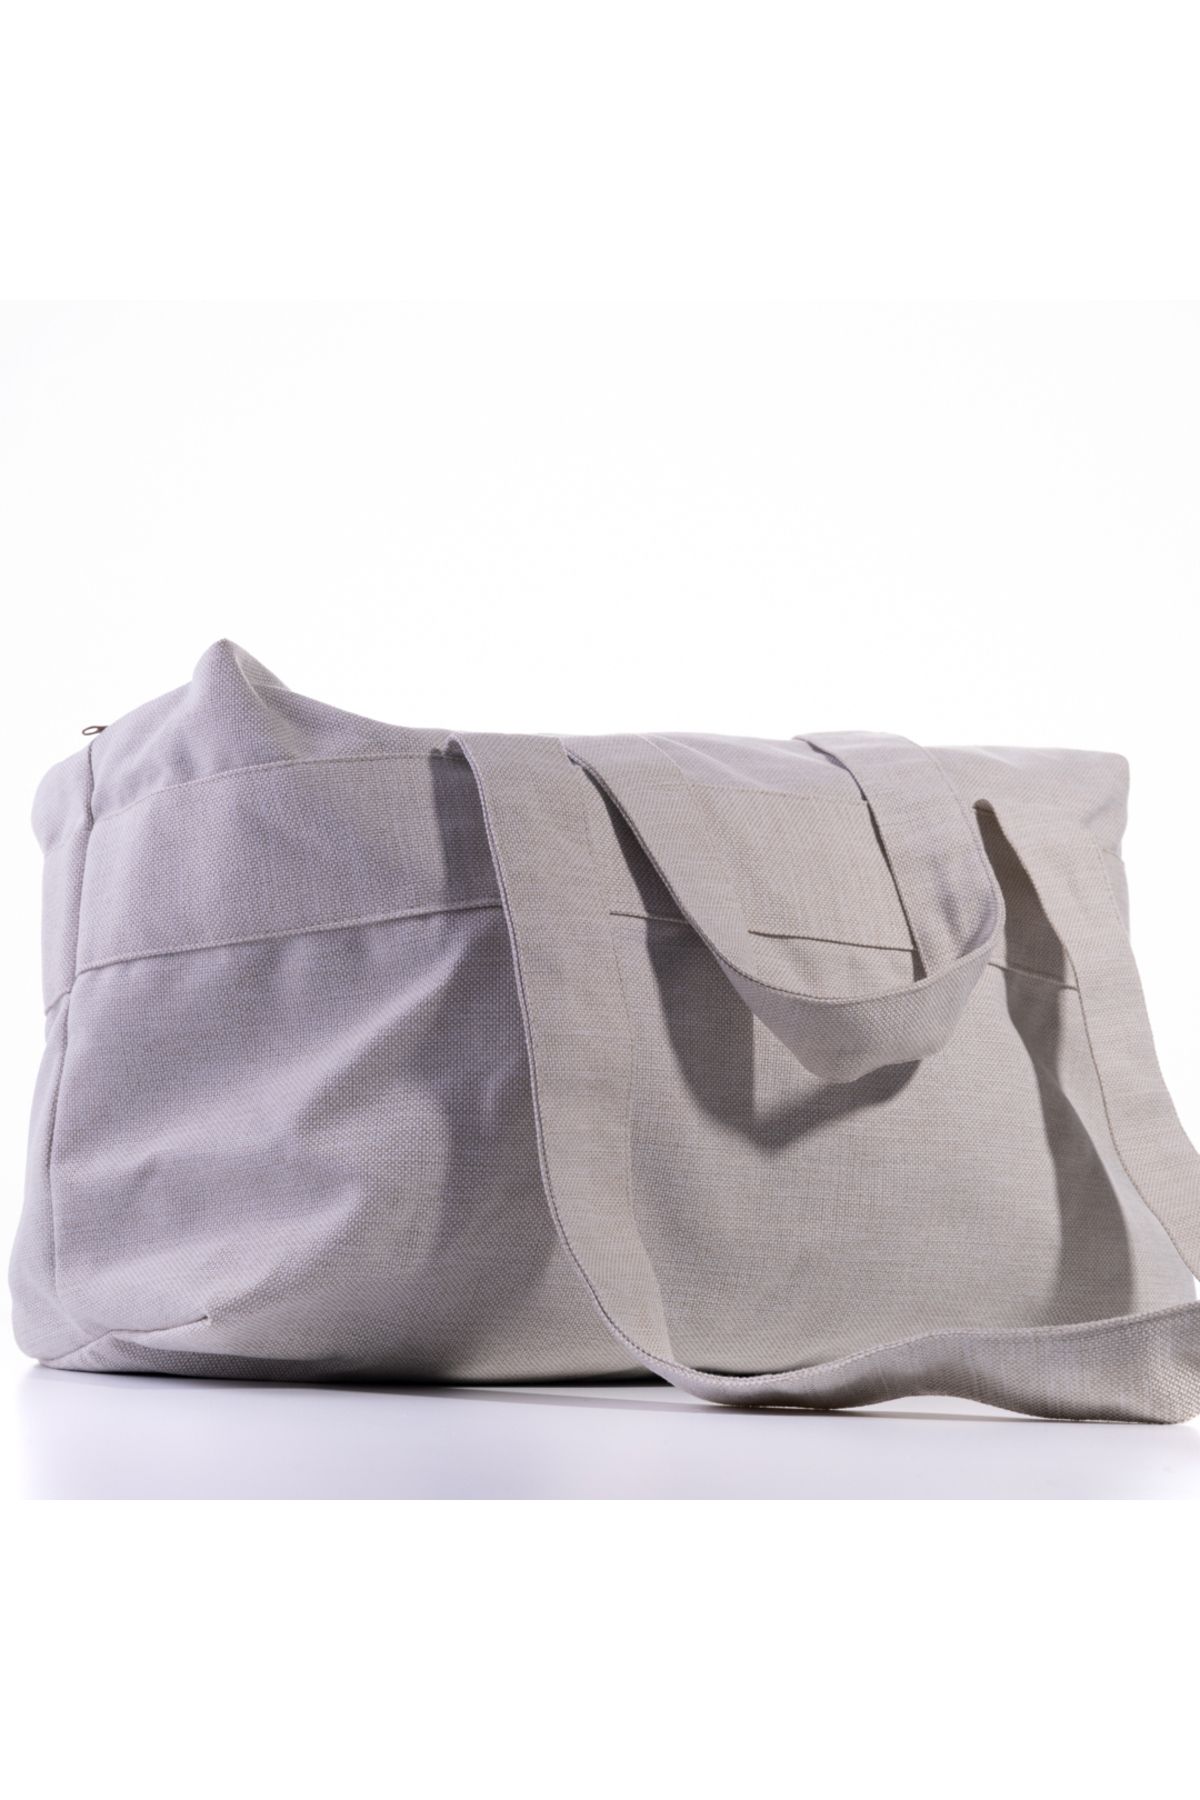 Bimotif Poly keten kumaştan seyahat çantası, 60x45 cm, gri